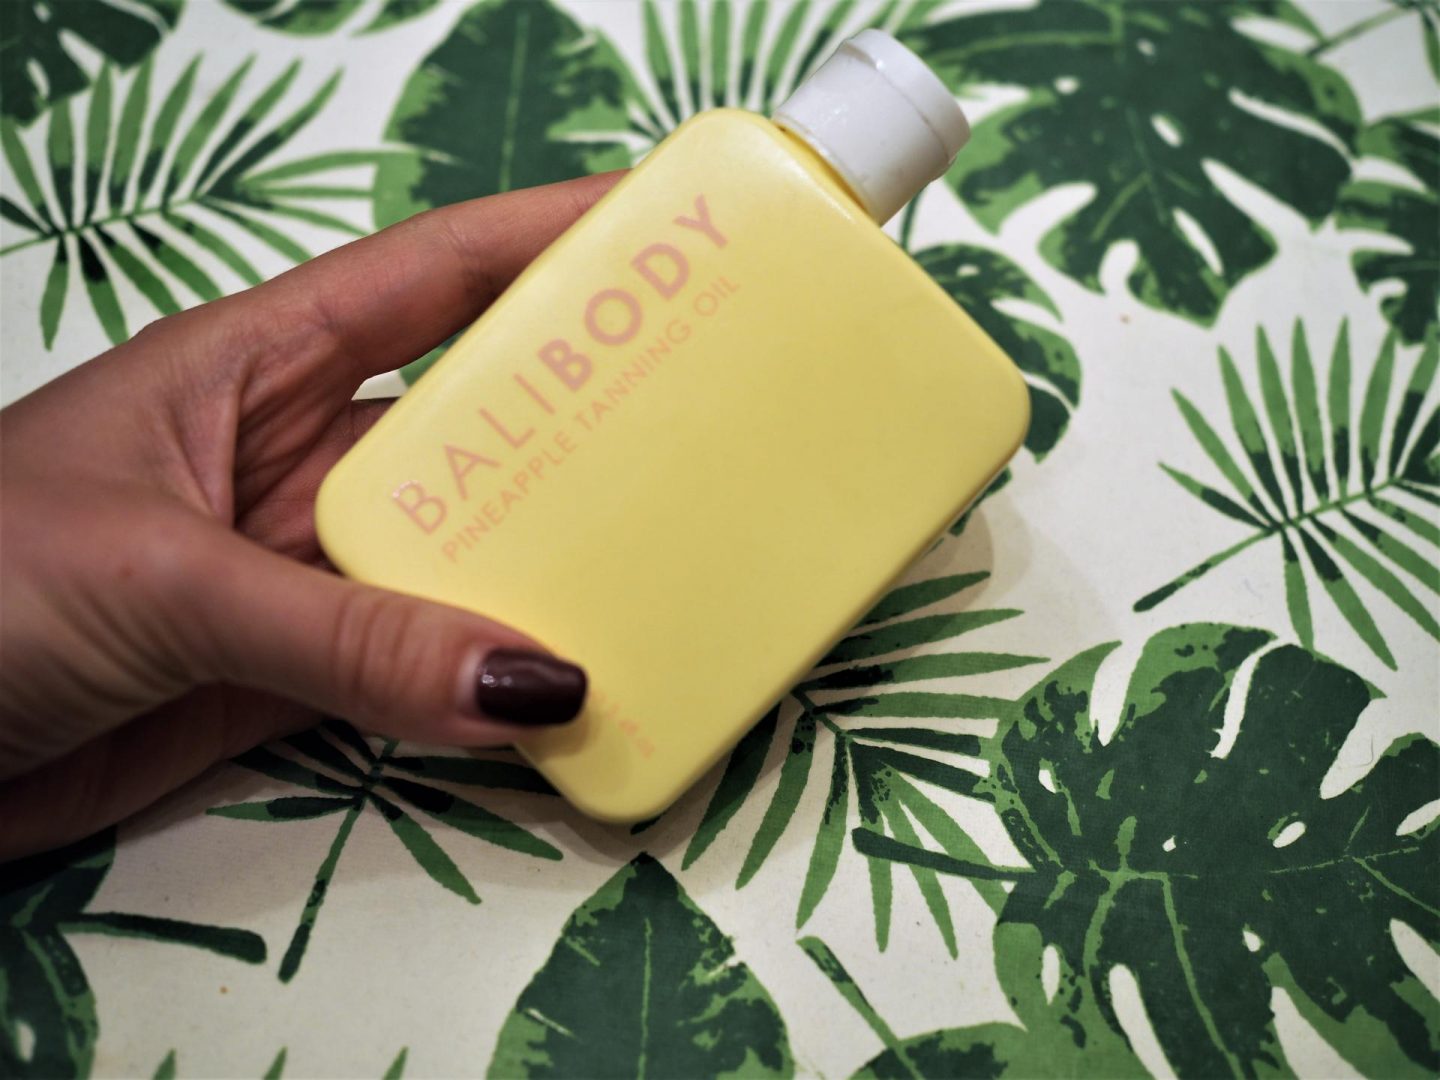 Bali Body Pineapple Body Oil